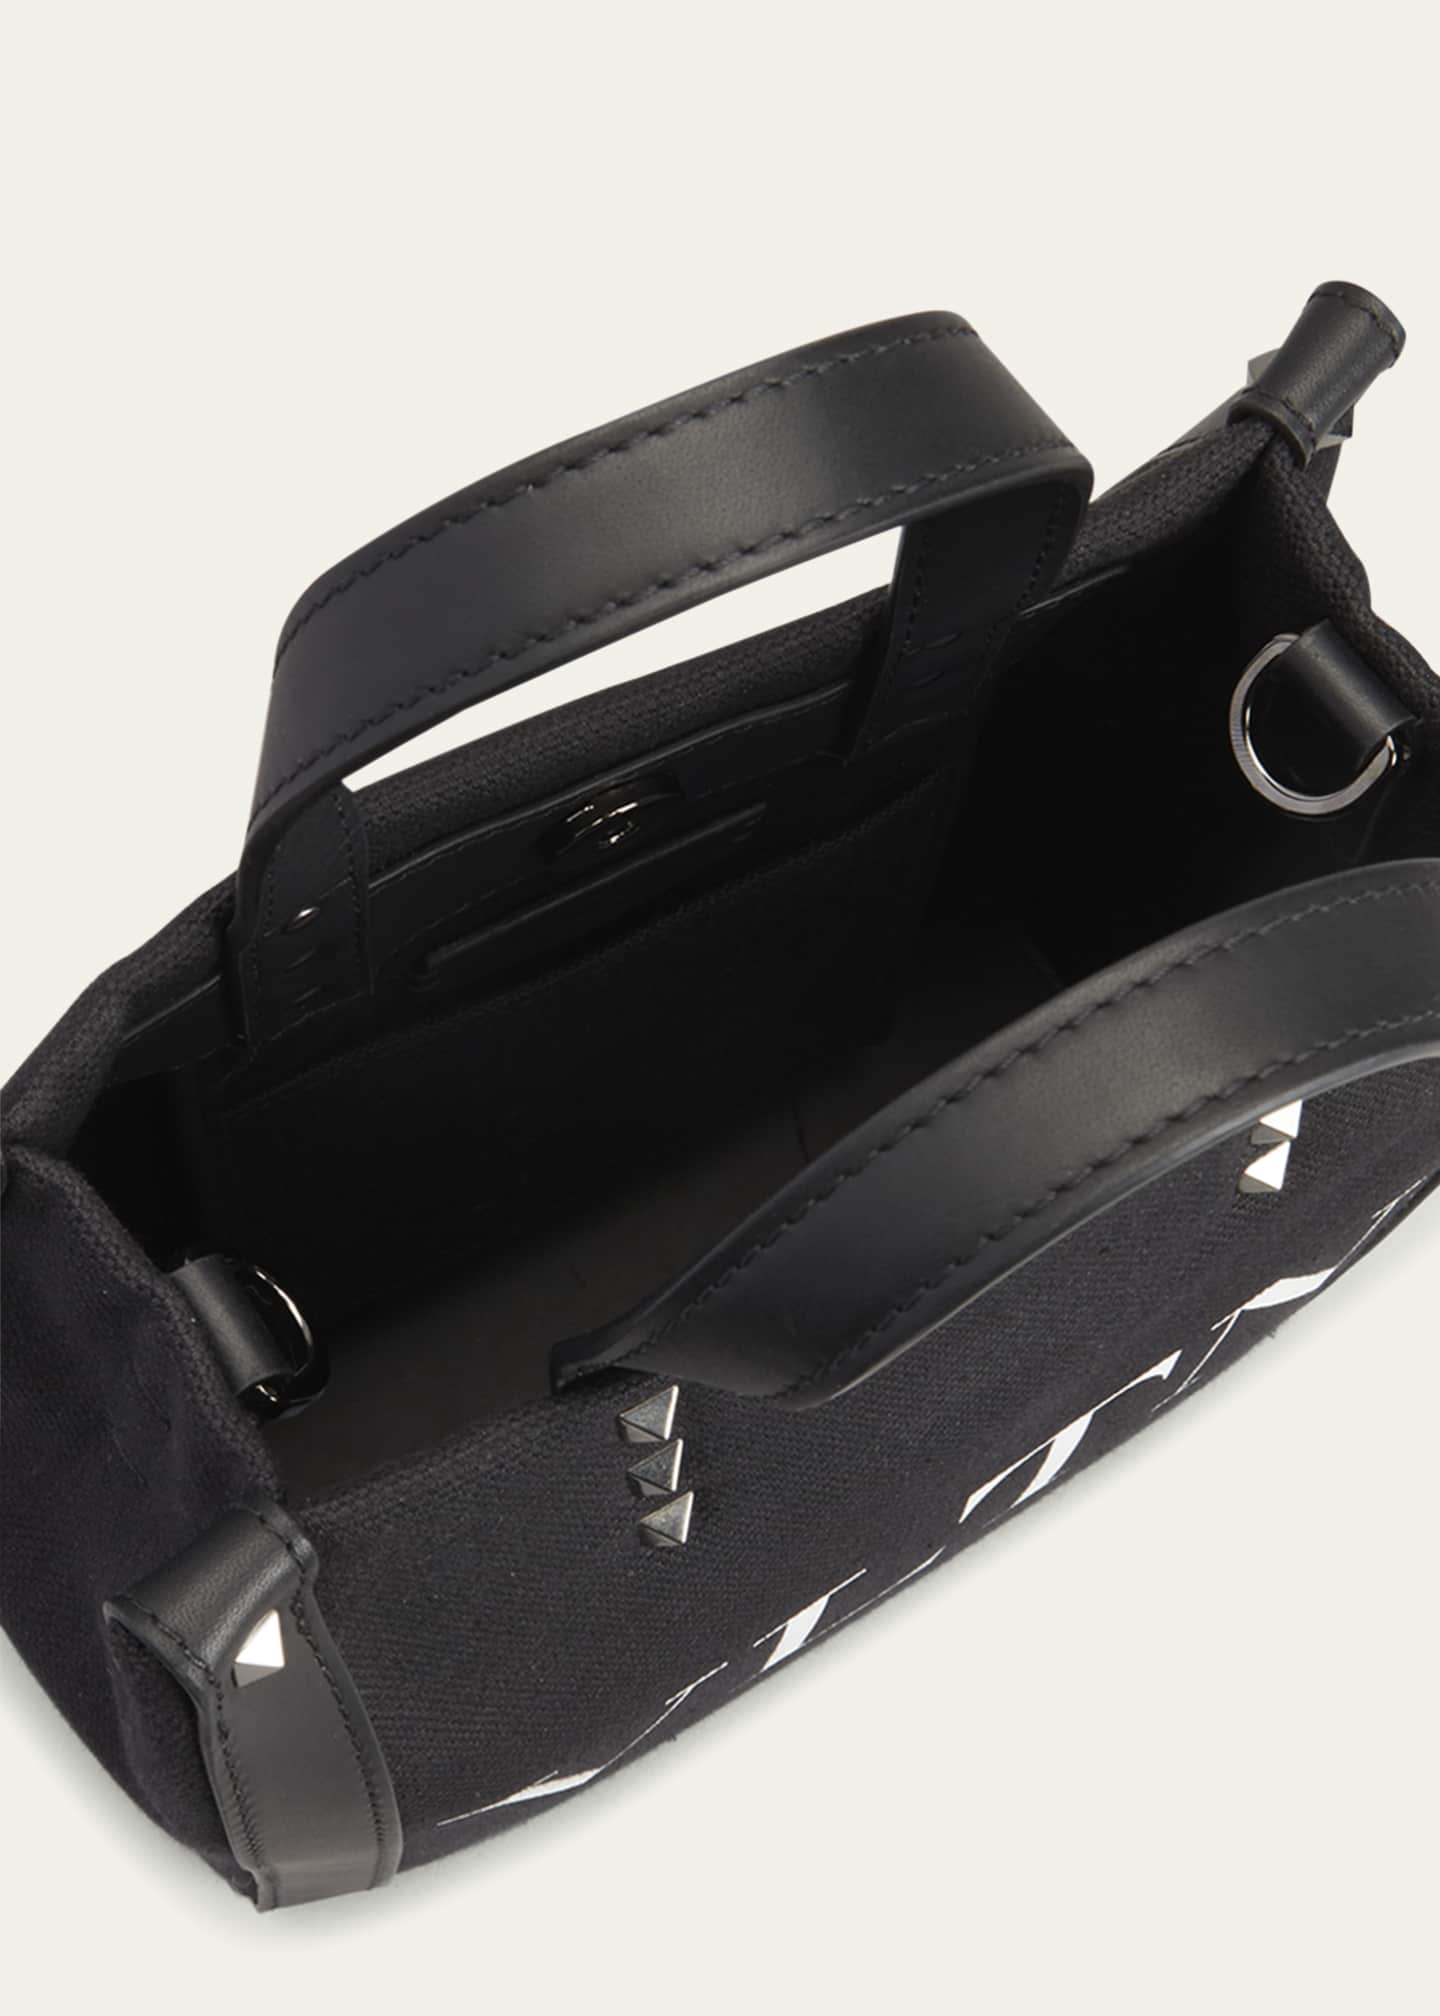 Valentino Canvas VLTN Backpack - Backpacks, Handbags